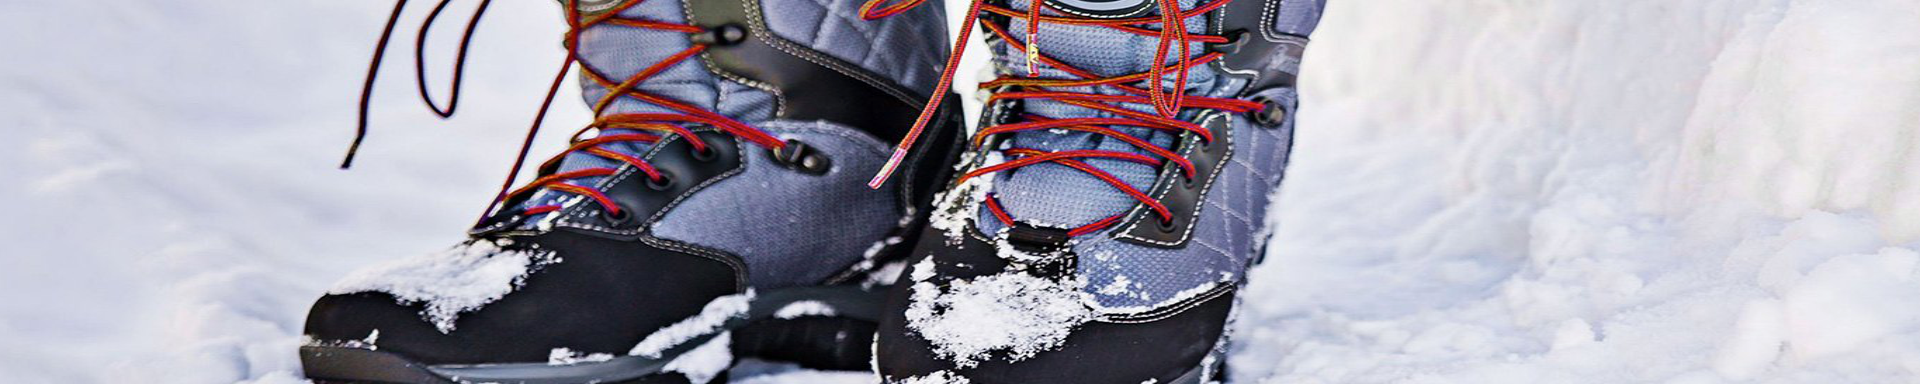 Snowmobile Boots | MunroPowersports.com | Munro Industries mp-100803030407